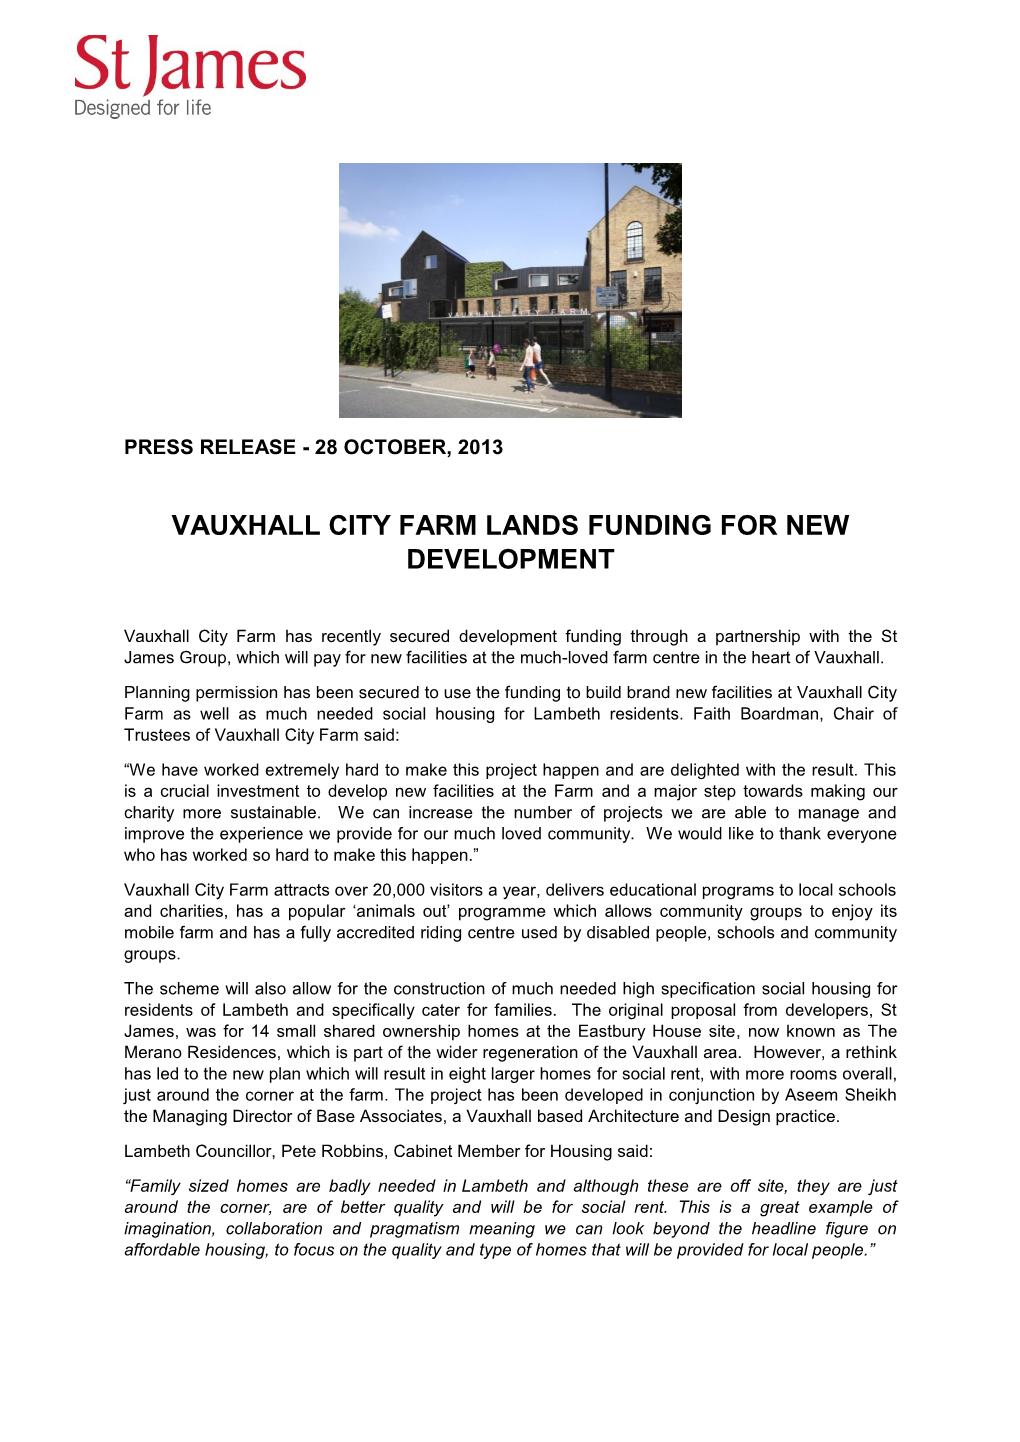 Vauxhall City Farm Lands Funding for New Development